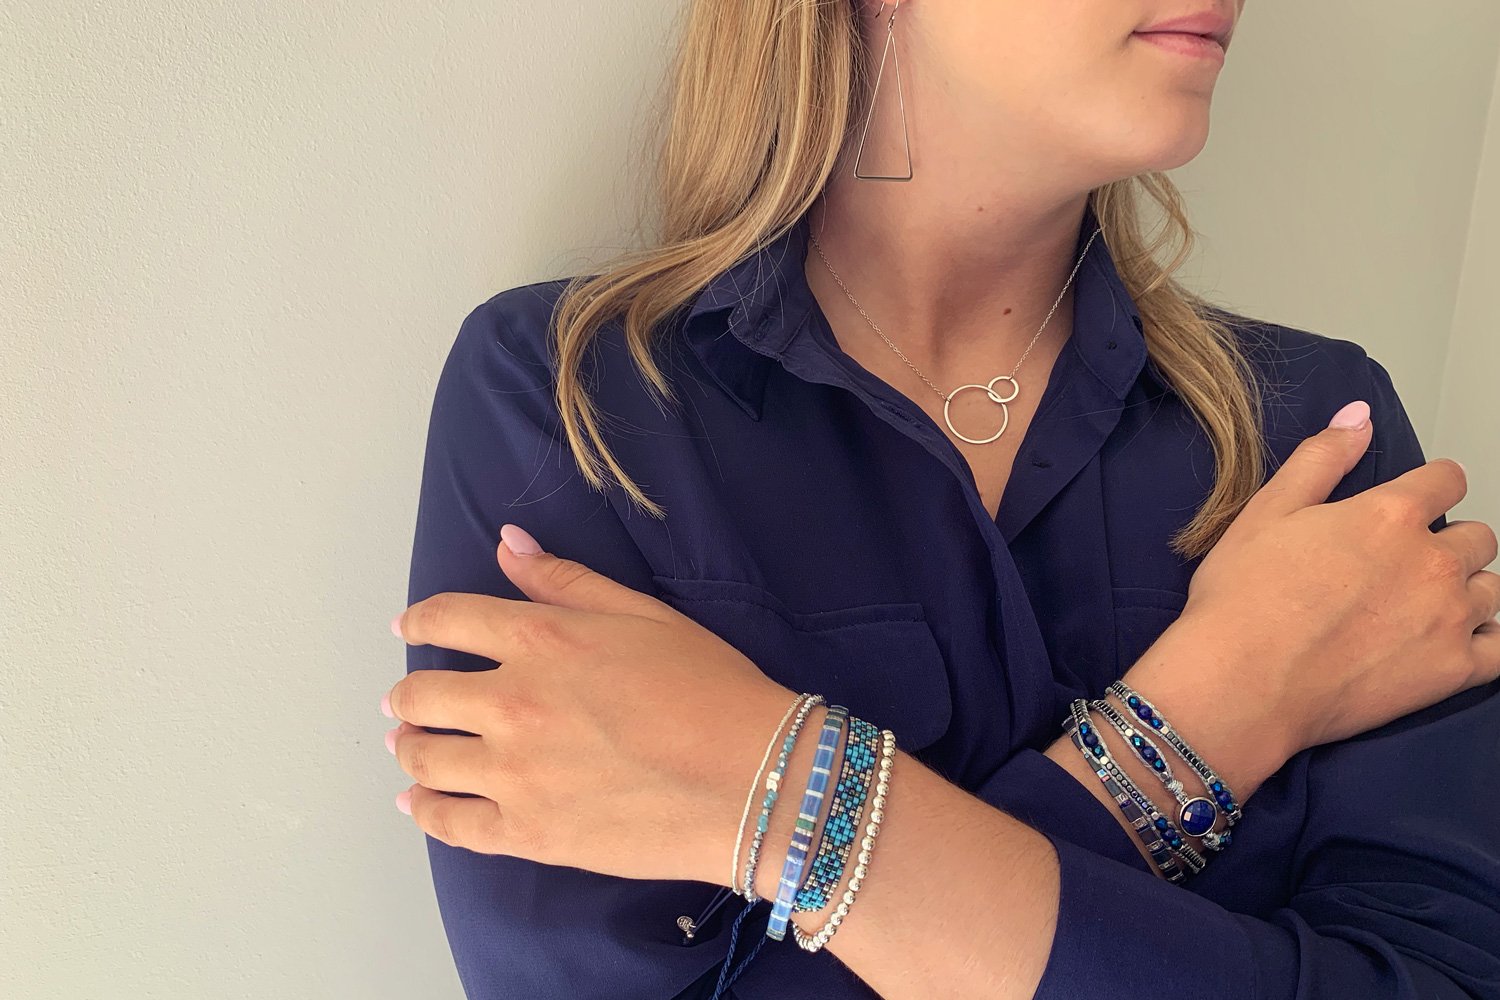 America Blue Lapis Lazuli & Semi Precious Stone Wrap Bracelet - Boho Betty USA